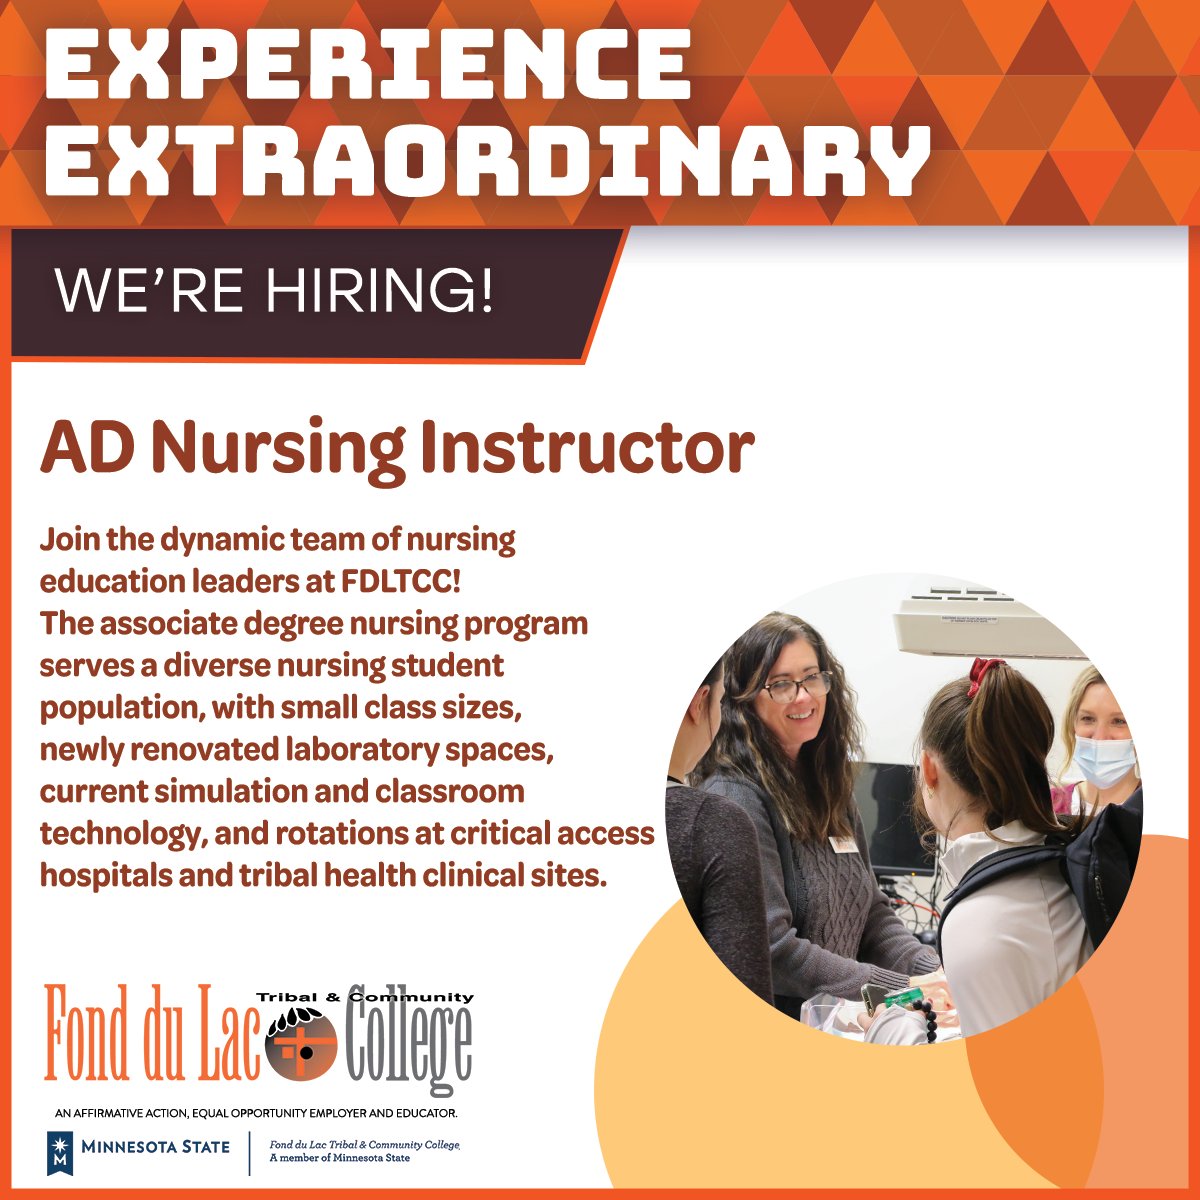 We're #hiring! Join the fantastic team of nursing educators at #FDLTCC as an AD Nursing Instructor! Learn more and apply at fdltcc.peopleadmin.com/postings/1555. Posting number: F049P.